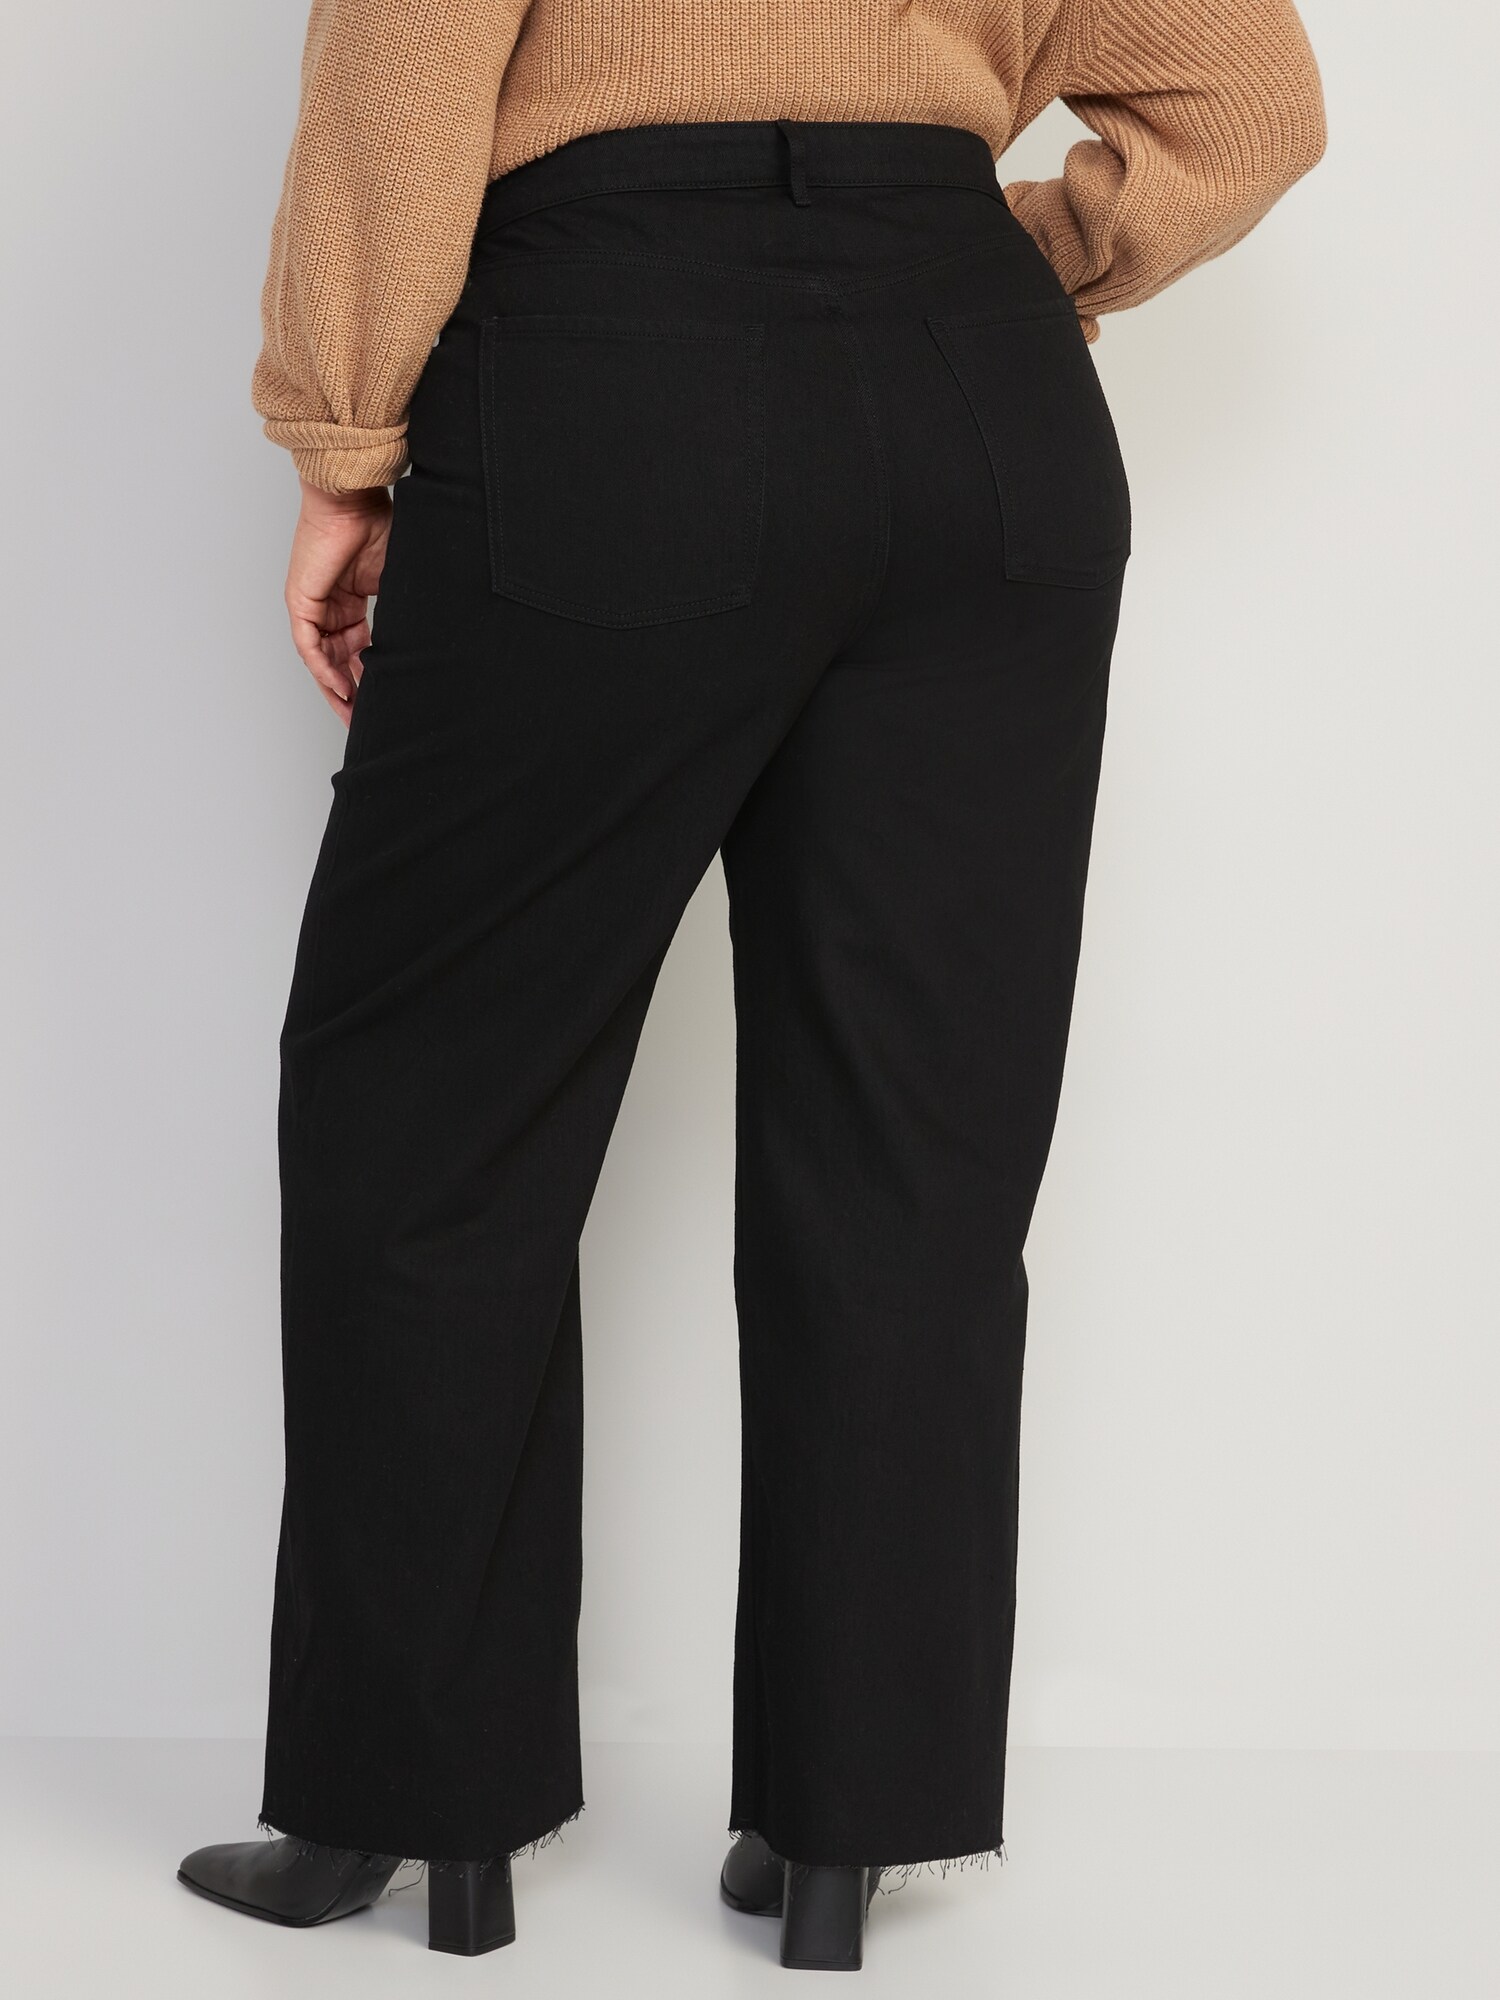 Women Slim Cropped Pants Fashion Comfortable Business Trousers Work Trousers  High Waist Zip Casual Pants : Amazon.co.uk: Fashion